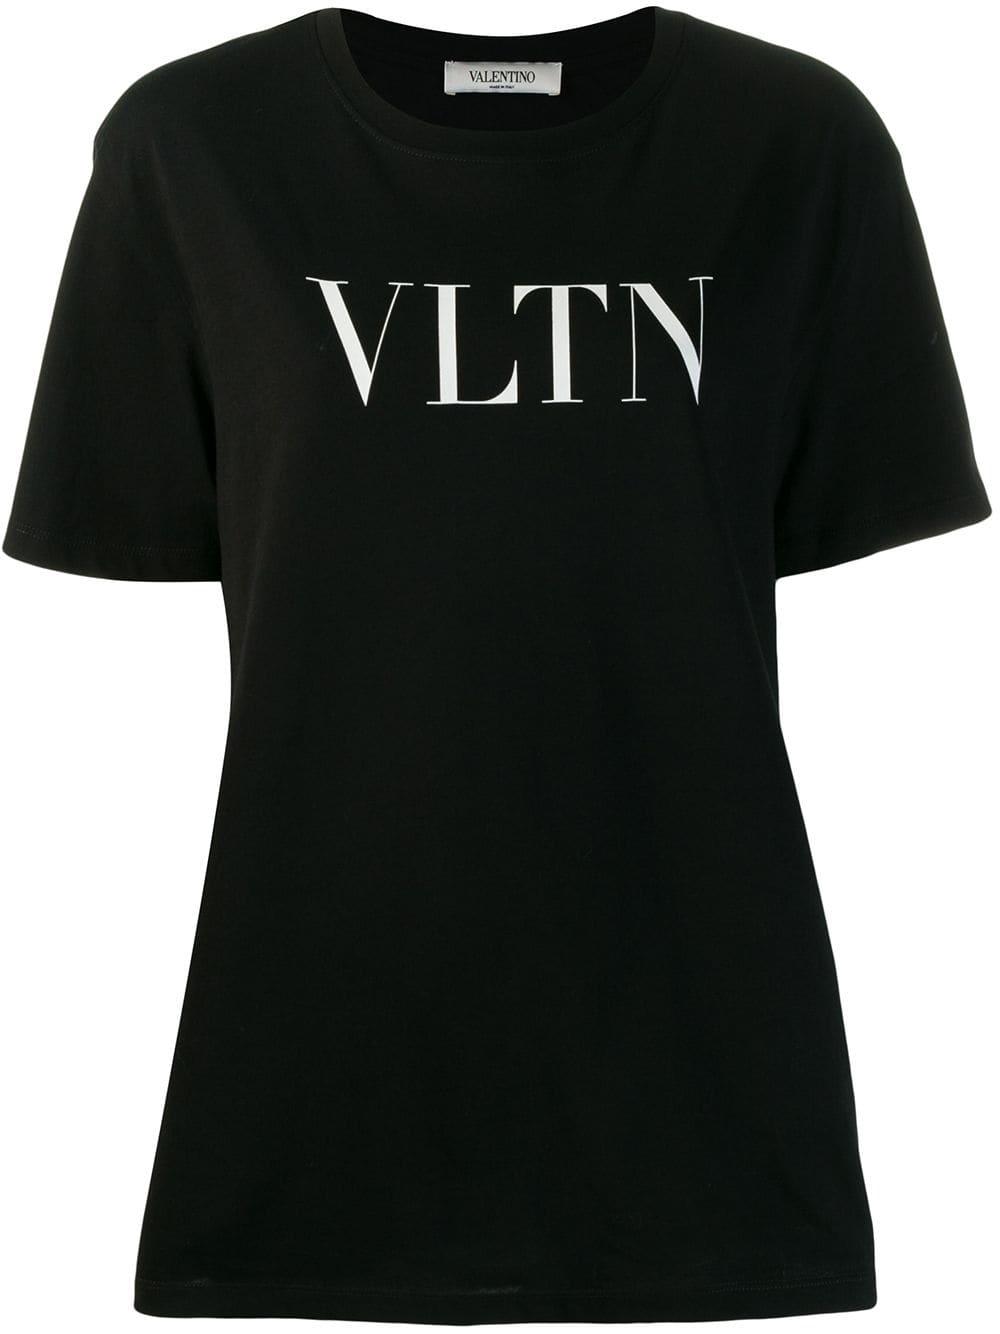 Valentino Vltn Logo T-shirt in Black - Lyst